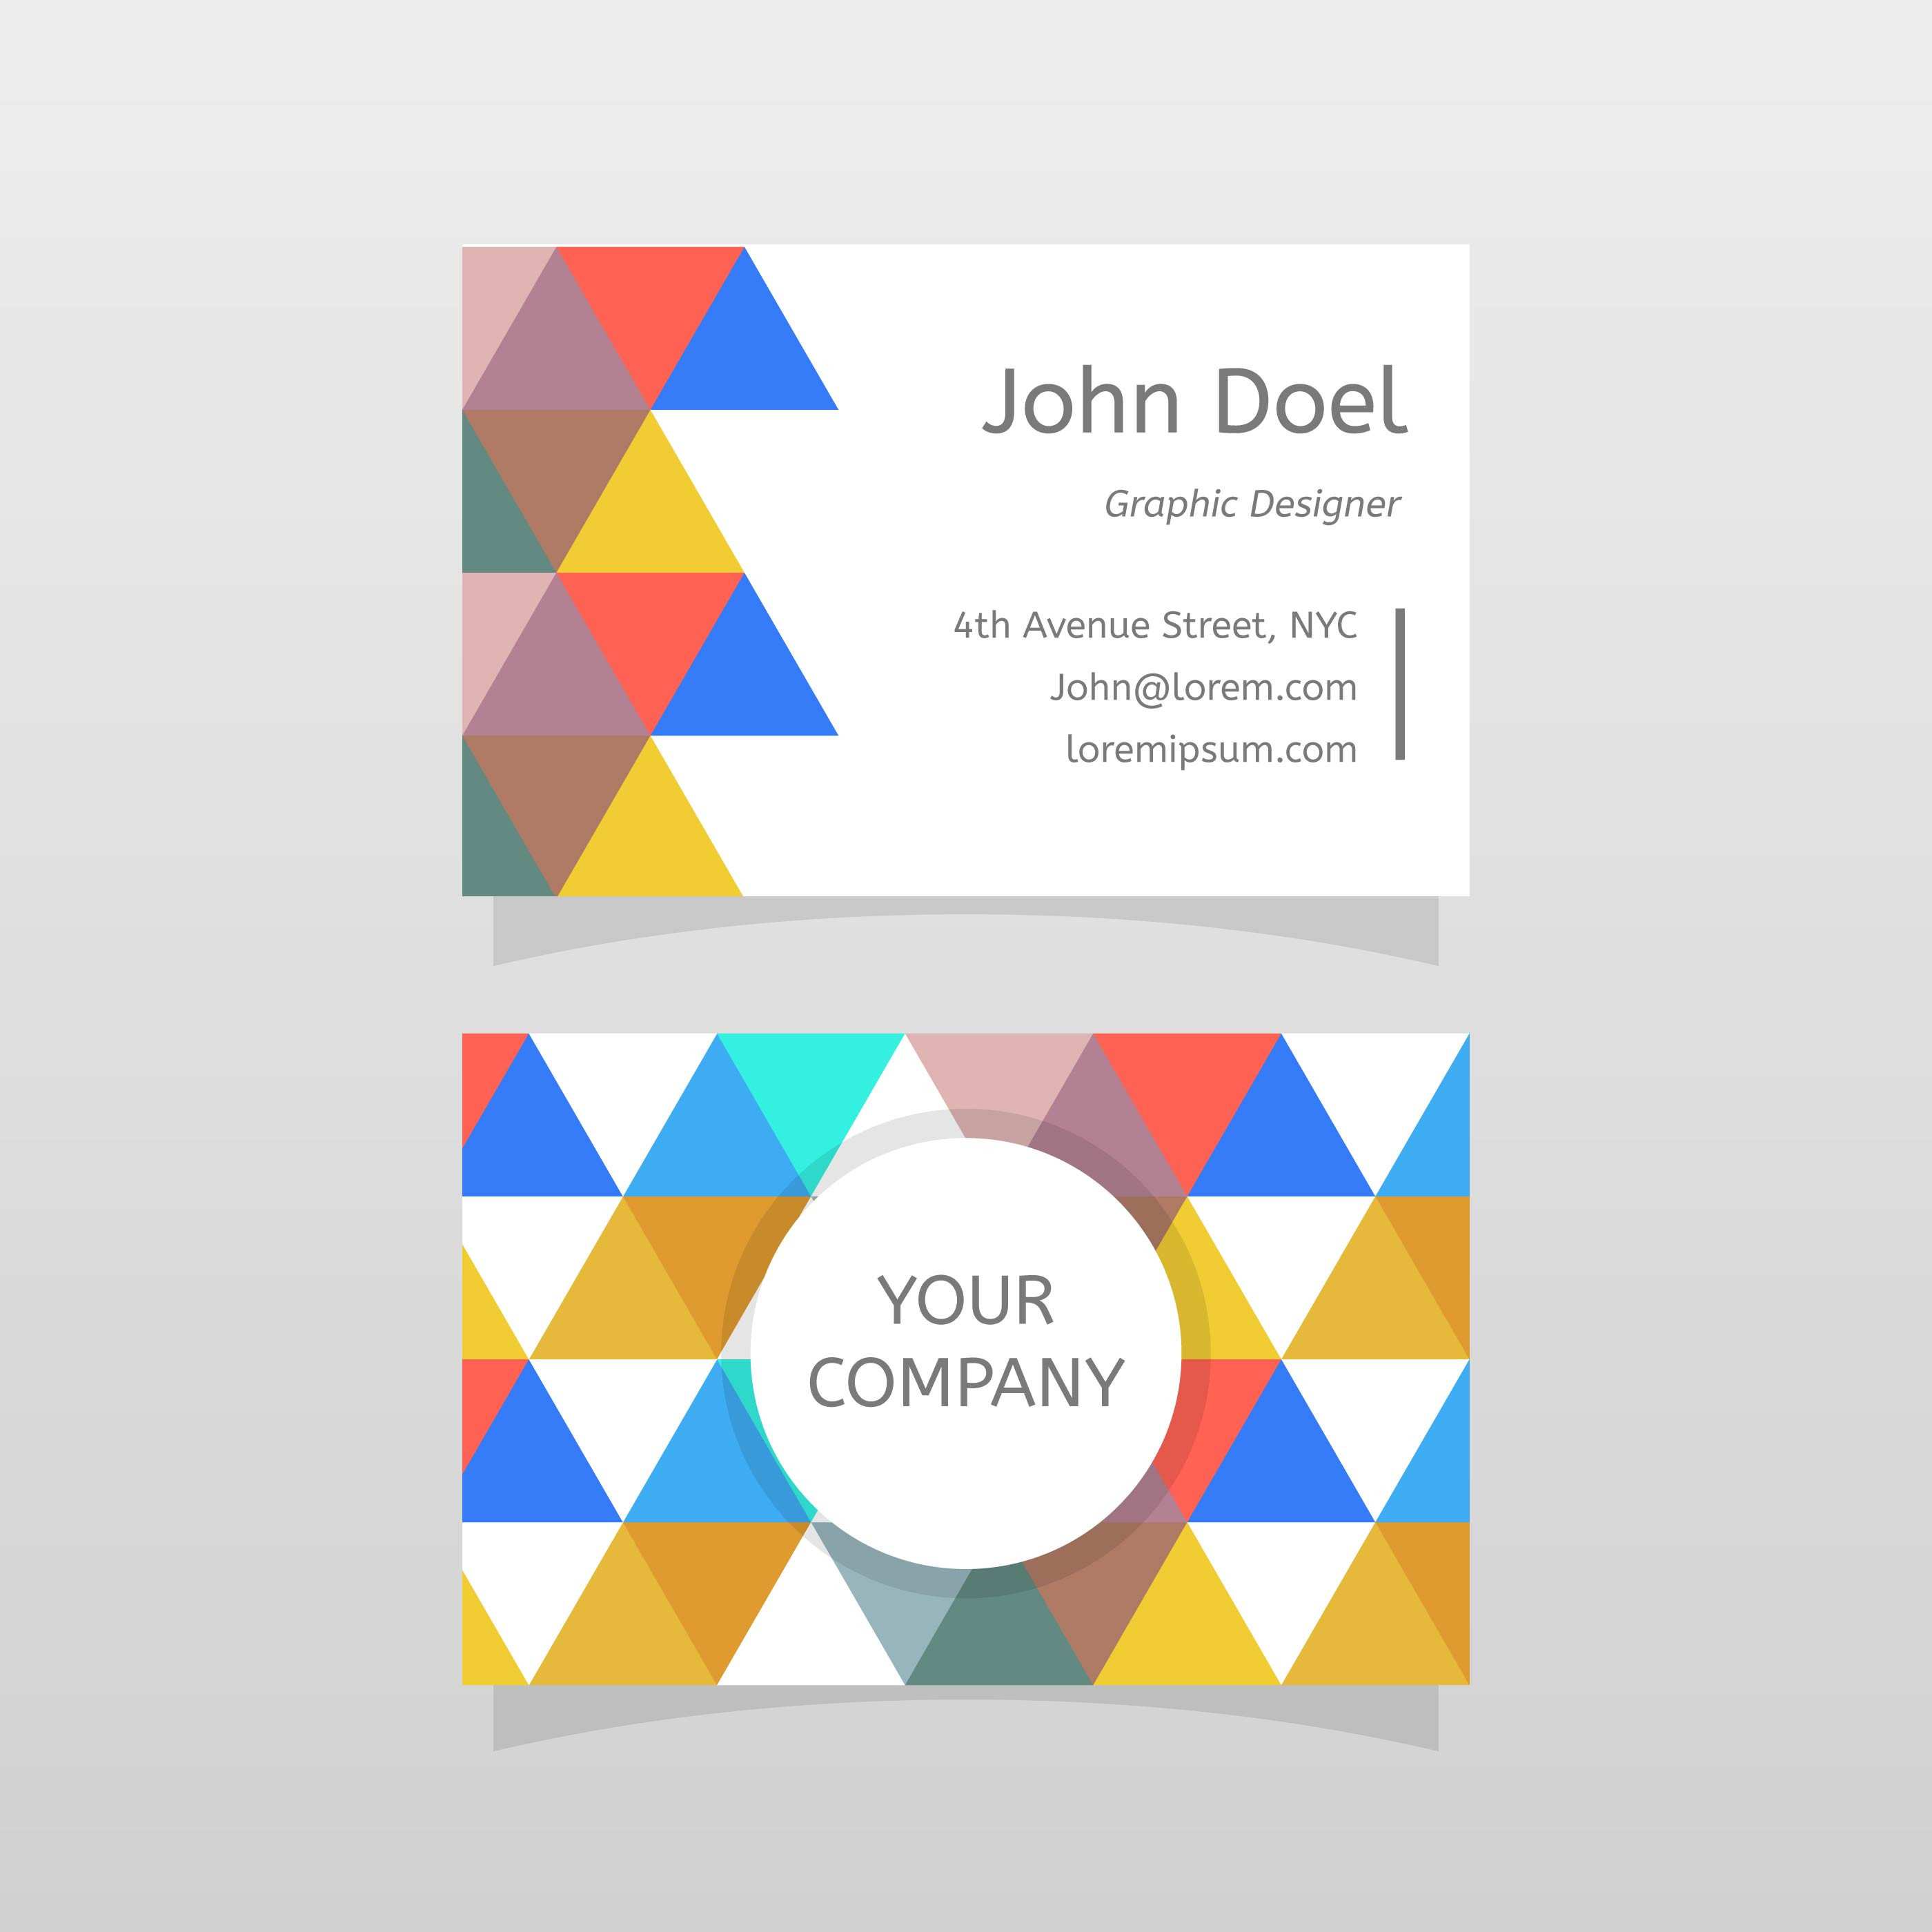 vistaprint business card download template illustrator